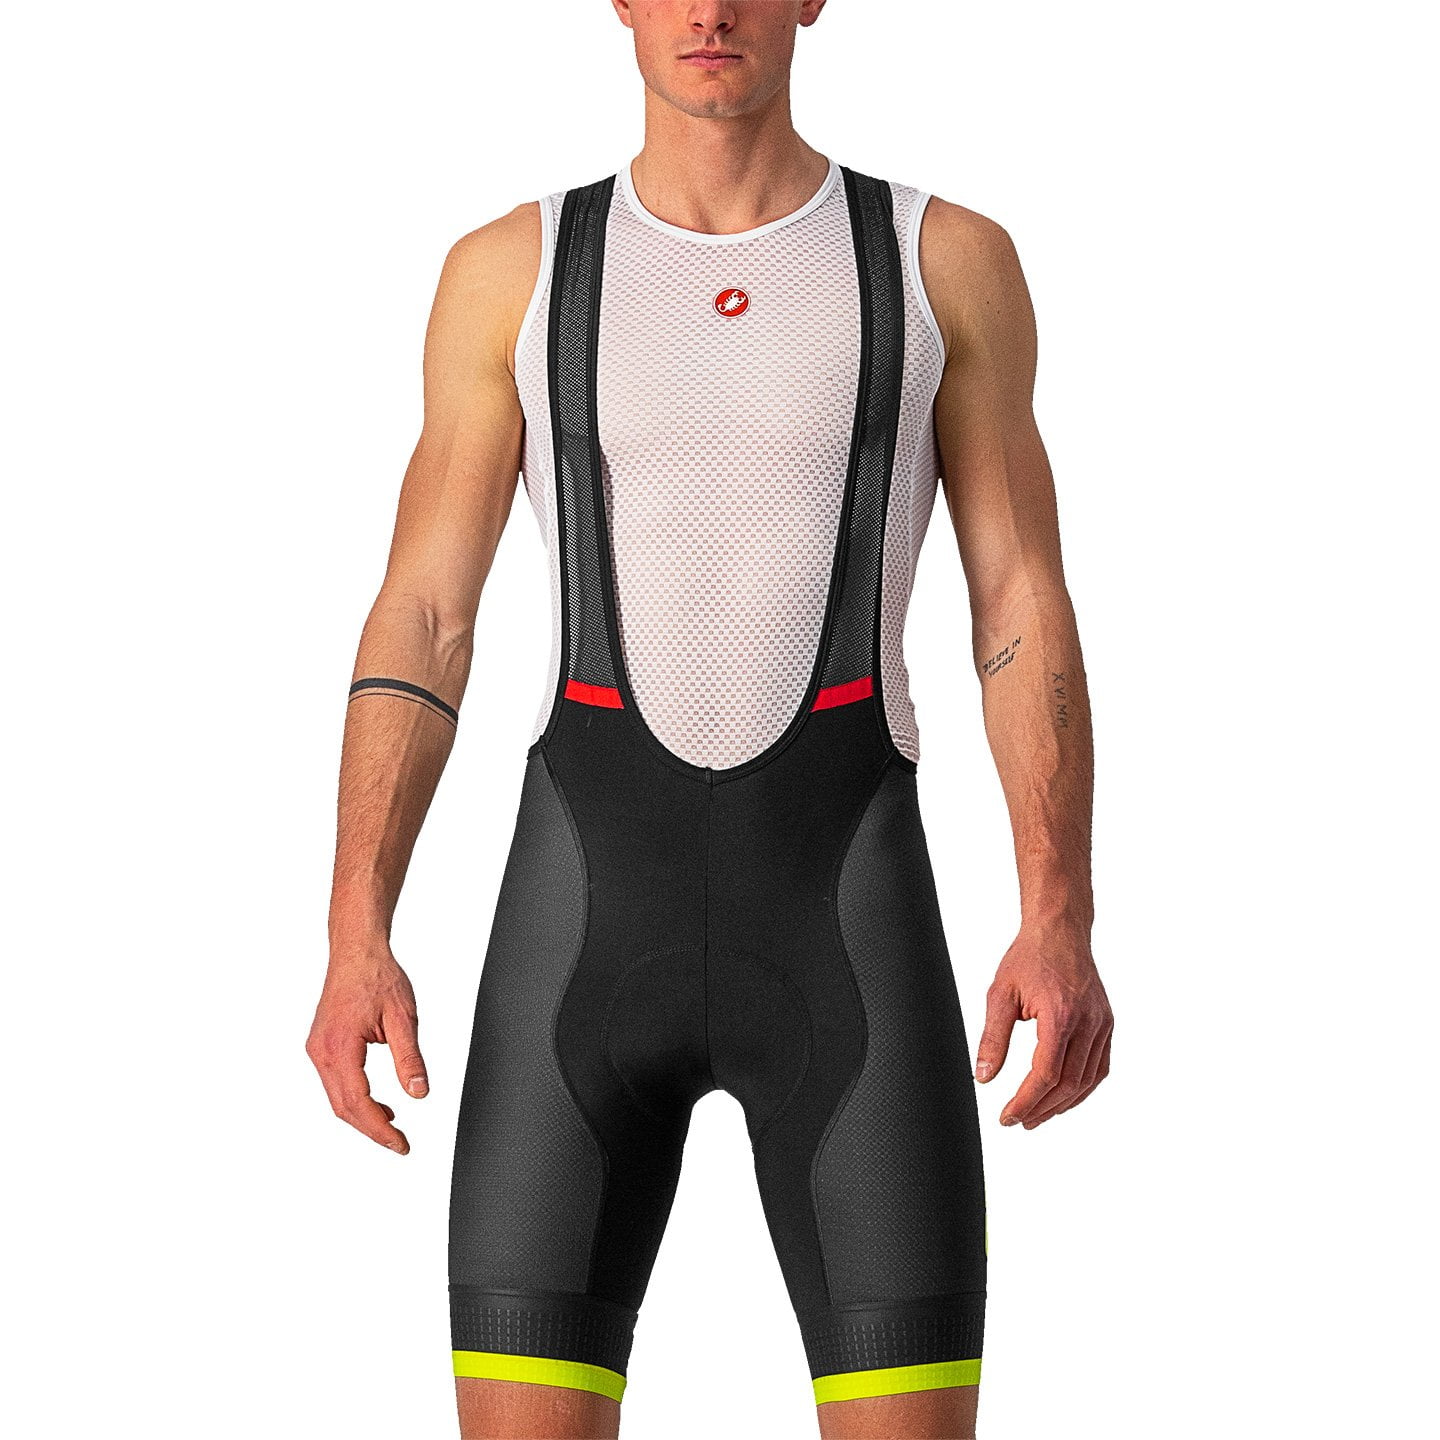 Competizione Kit Bib Shorts Bib Shorts, for men, size XL, Cycle shorts, Cycling clothing